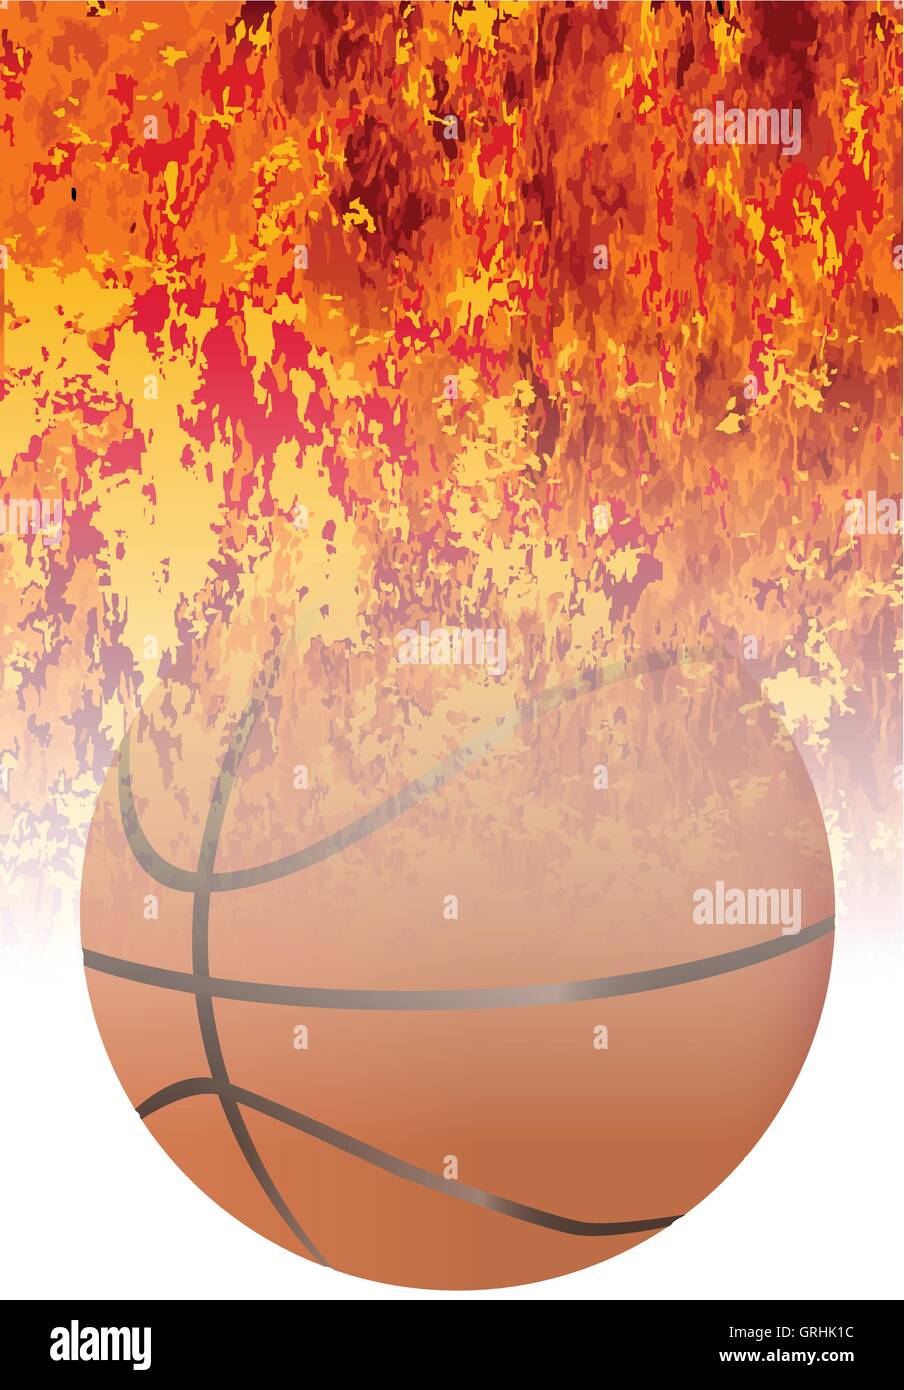 Roaring Flaming Basketball Stock Vector